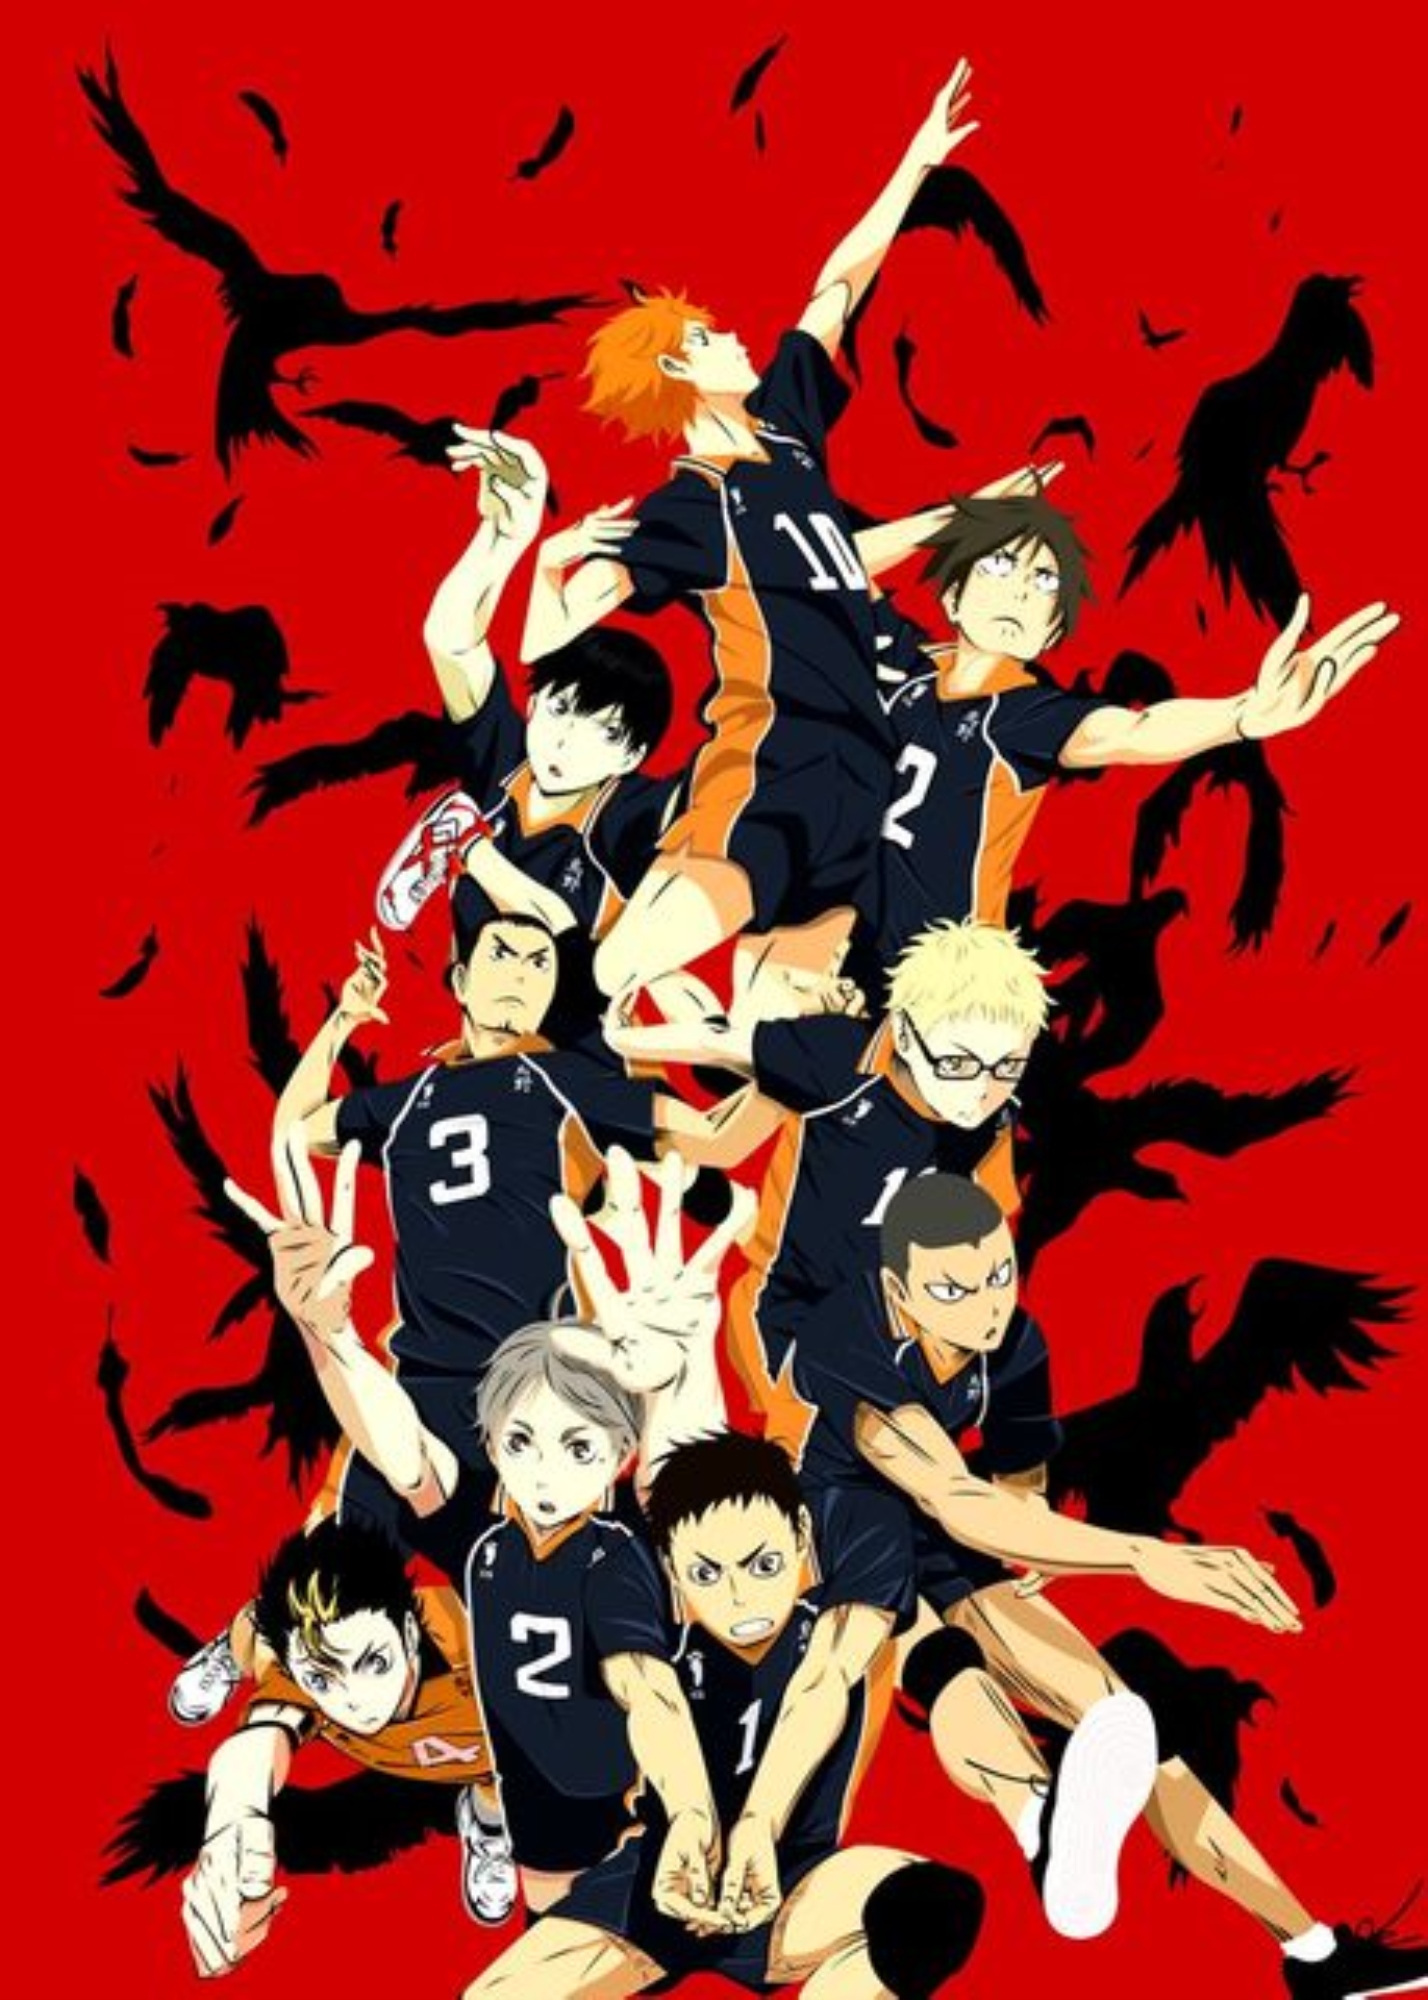 Haikyuu Kageyama Anime Japanese Anime Stuff Haikyuu Manga Haikyu Anime  Poster Crunchyroll Streaming Anime Merch Animated Series Show Karasuno  Volleyball Cool Wall Decor Art Print Poster 12x18 - Poster Foundry